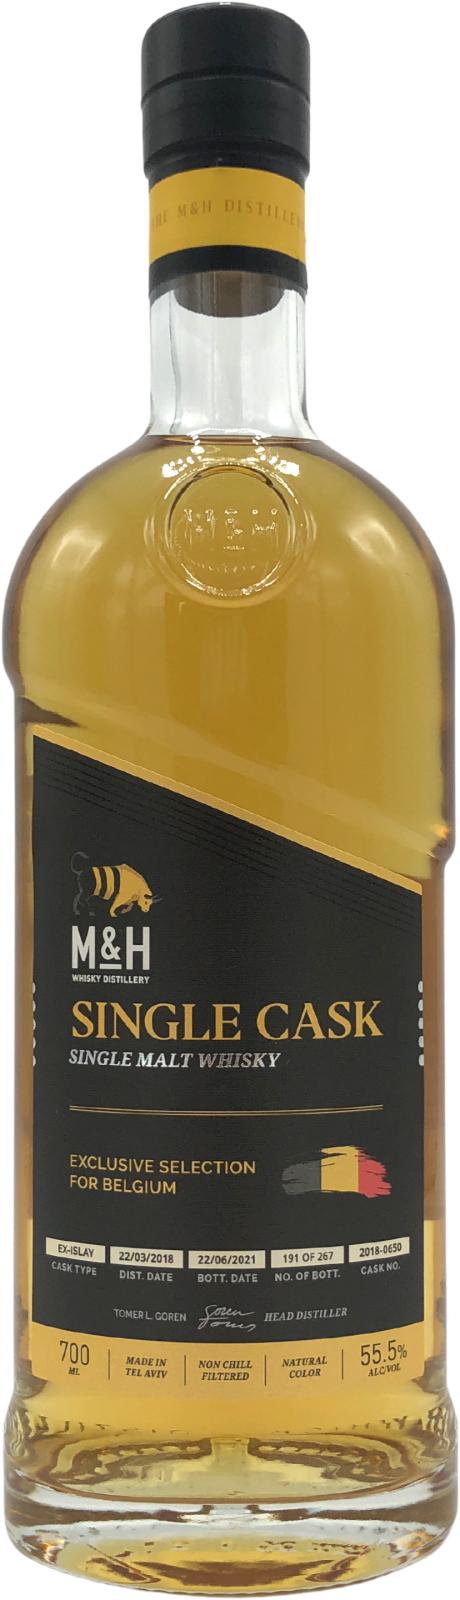 M&H 2018 Single Cask - Exclusive selection for Belgium  2021 Release (Cask #2018-0650) Single Malt Whisky | 700ML